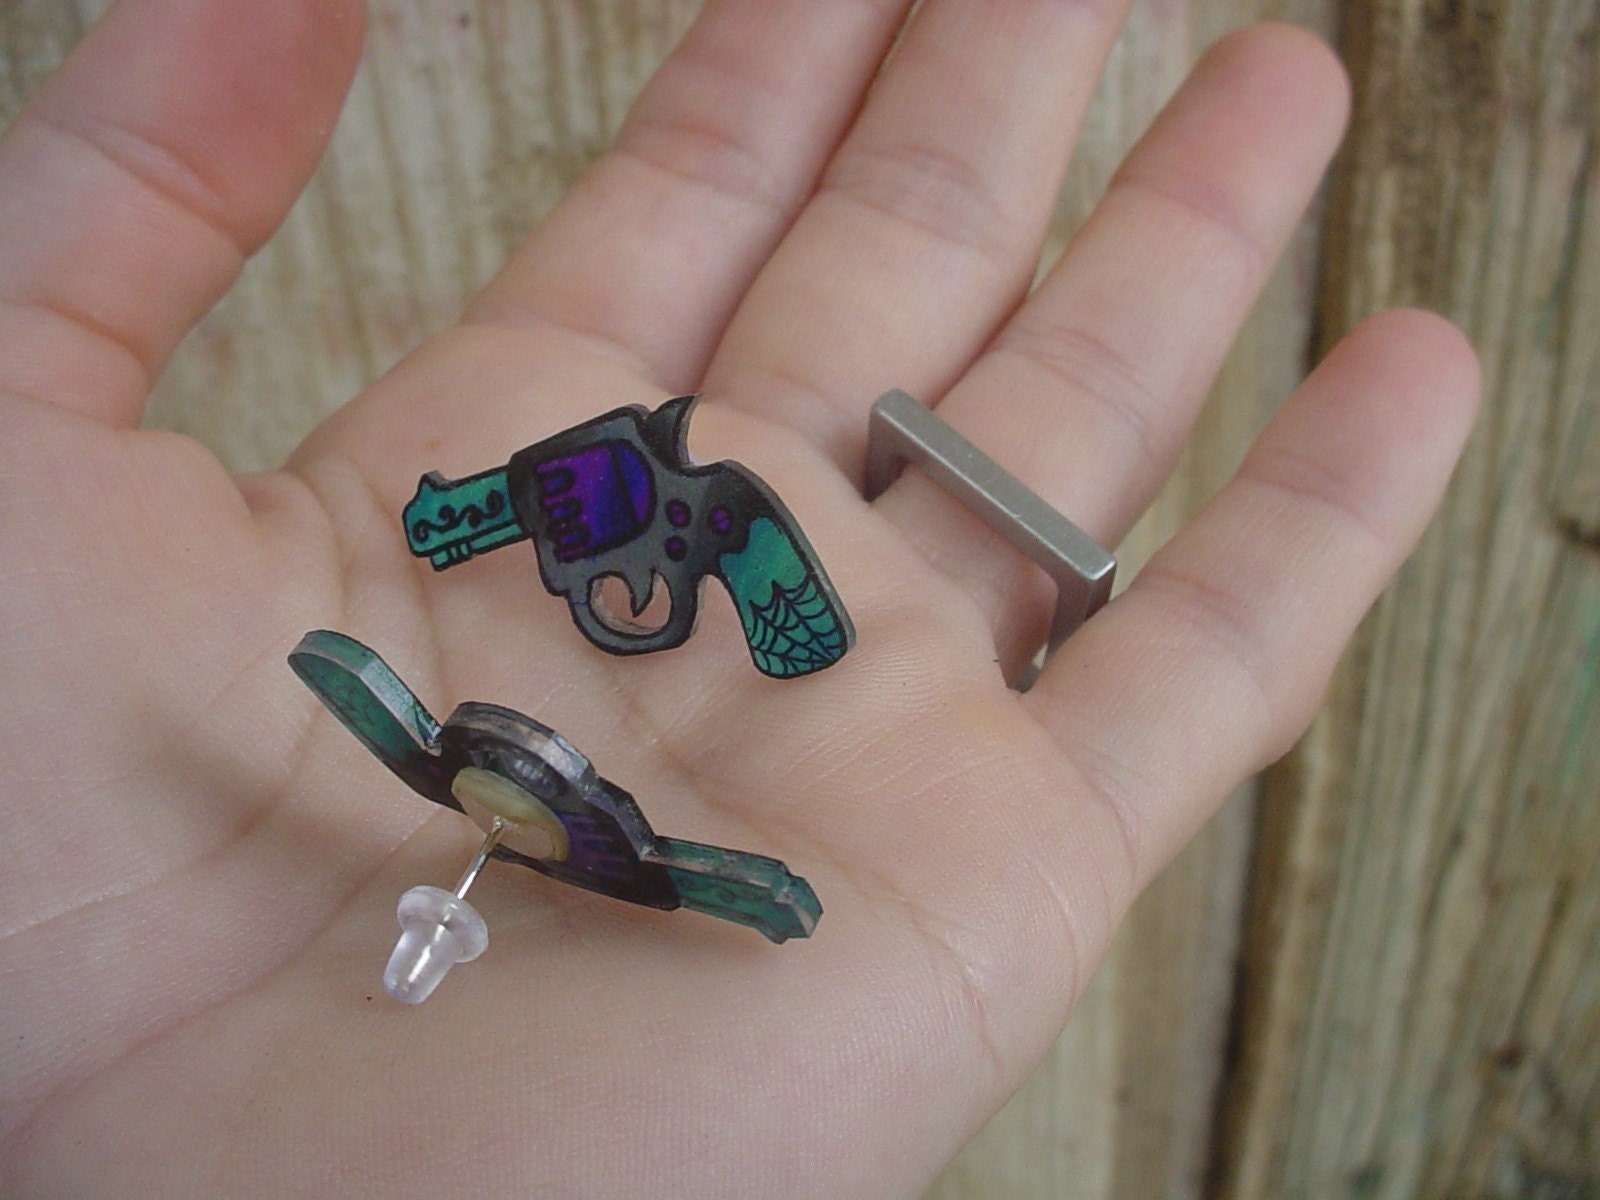 sweet little purple and teal tattoo pistol (nickel free) ear studs/posts